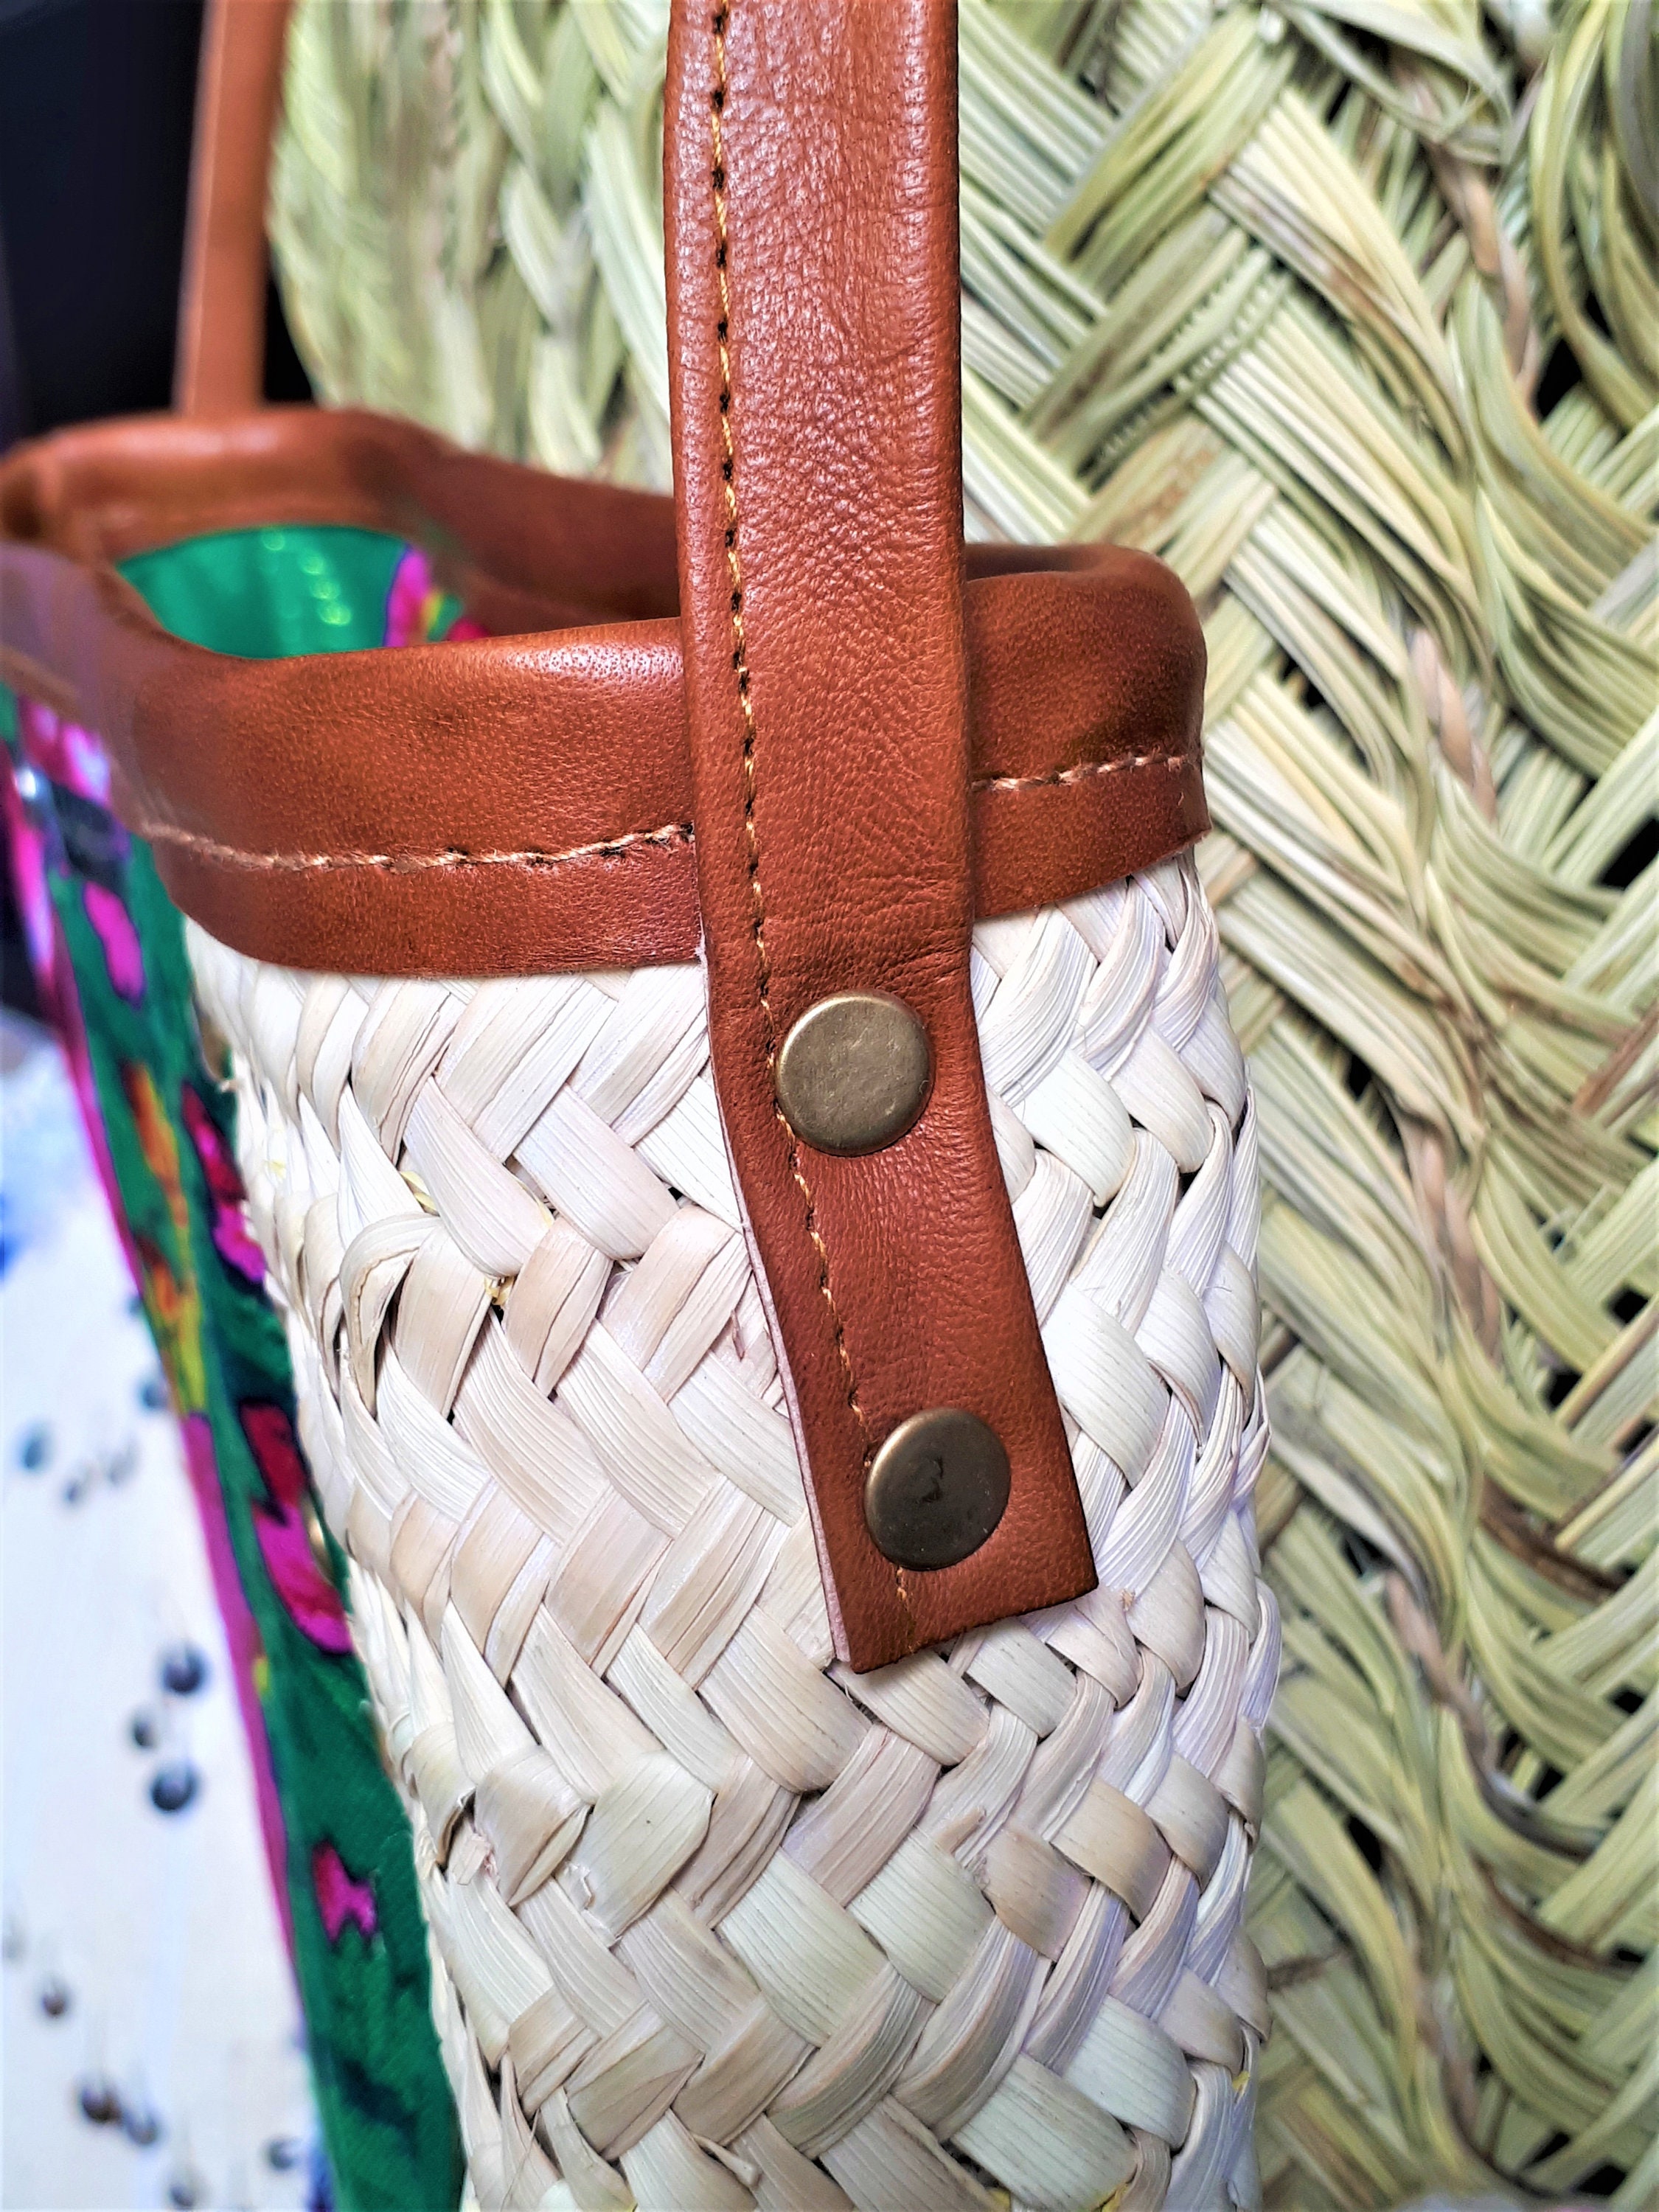 Nana handbag in doum and fabric scarf Handmade | Etsy